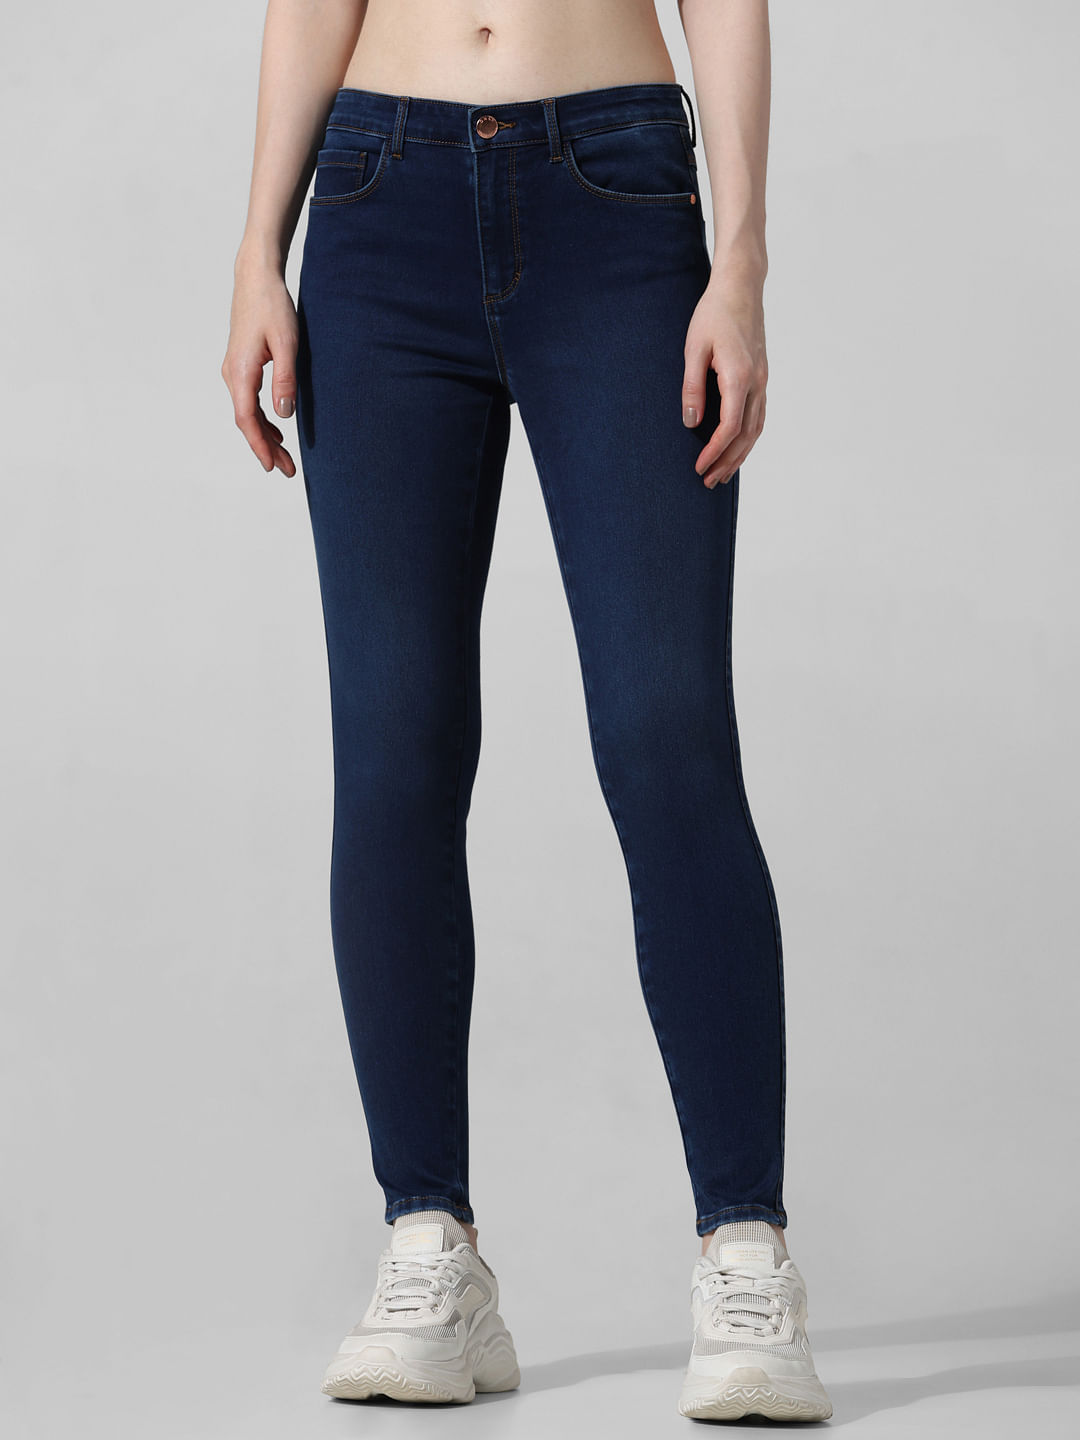 Women's Low-Rise Jeans | American Eagle